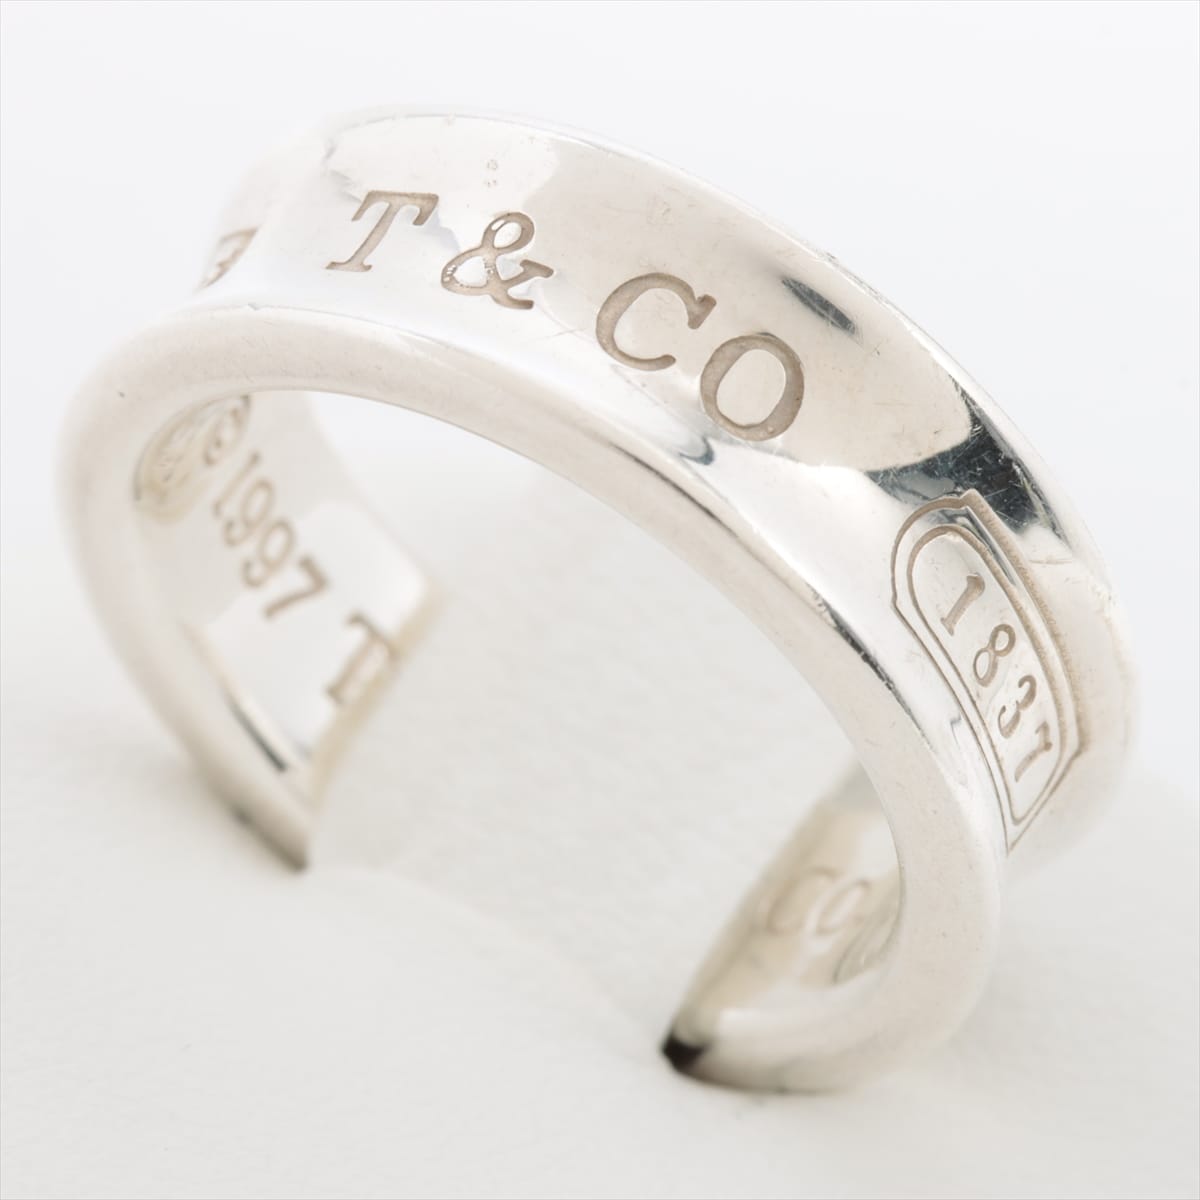 Tiffany 1837 Narrow rings 925 6.8g Silver